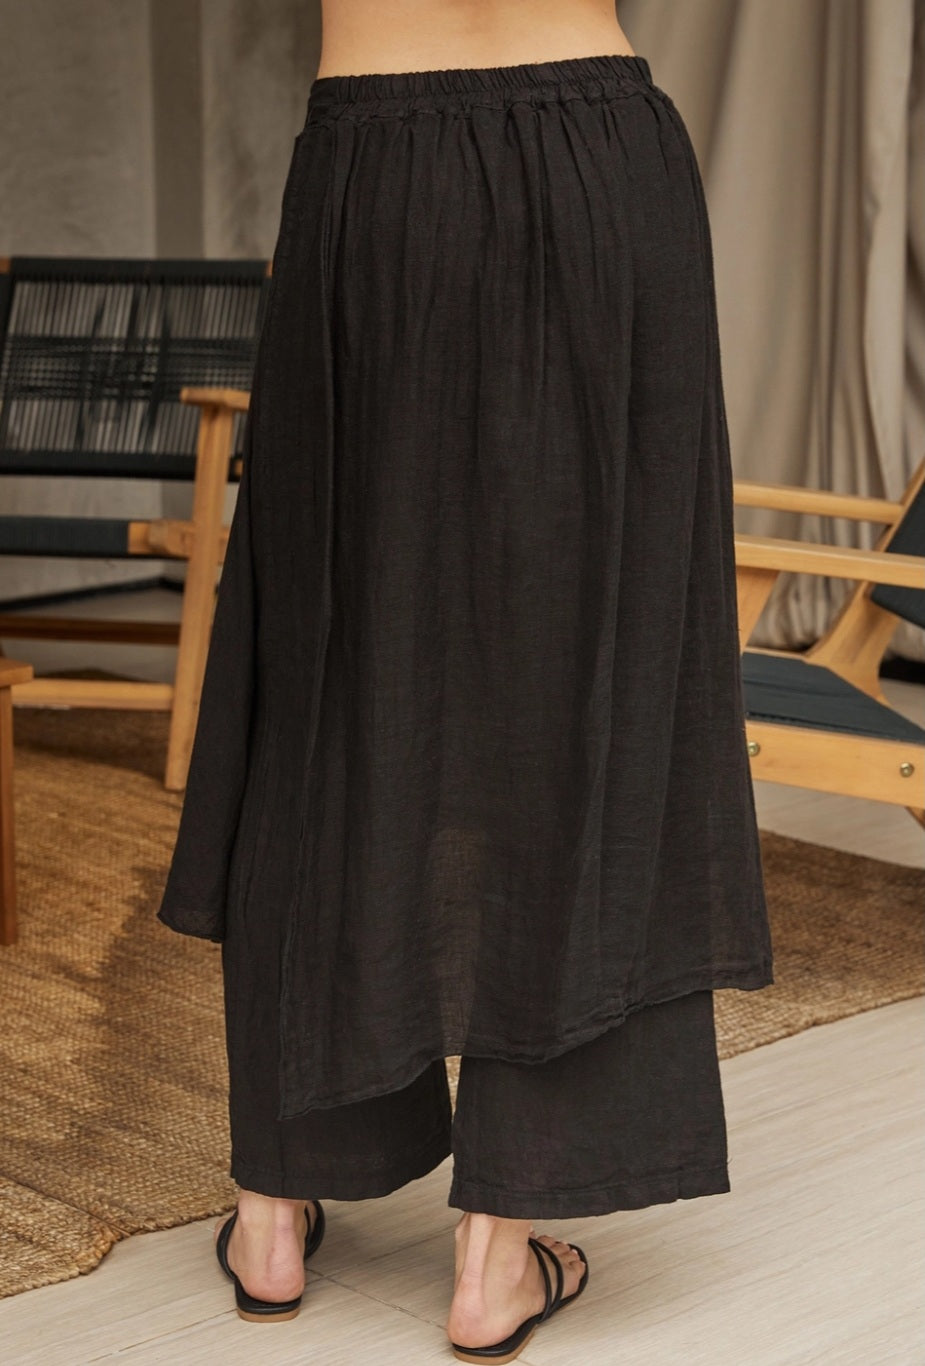 Bohemian linen overlay pant black